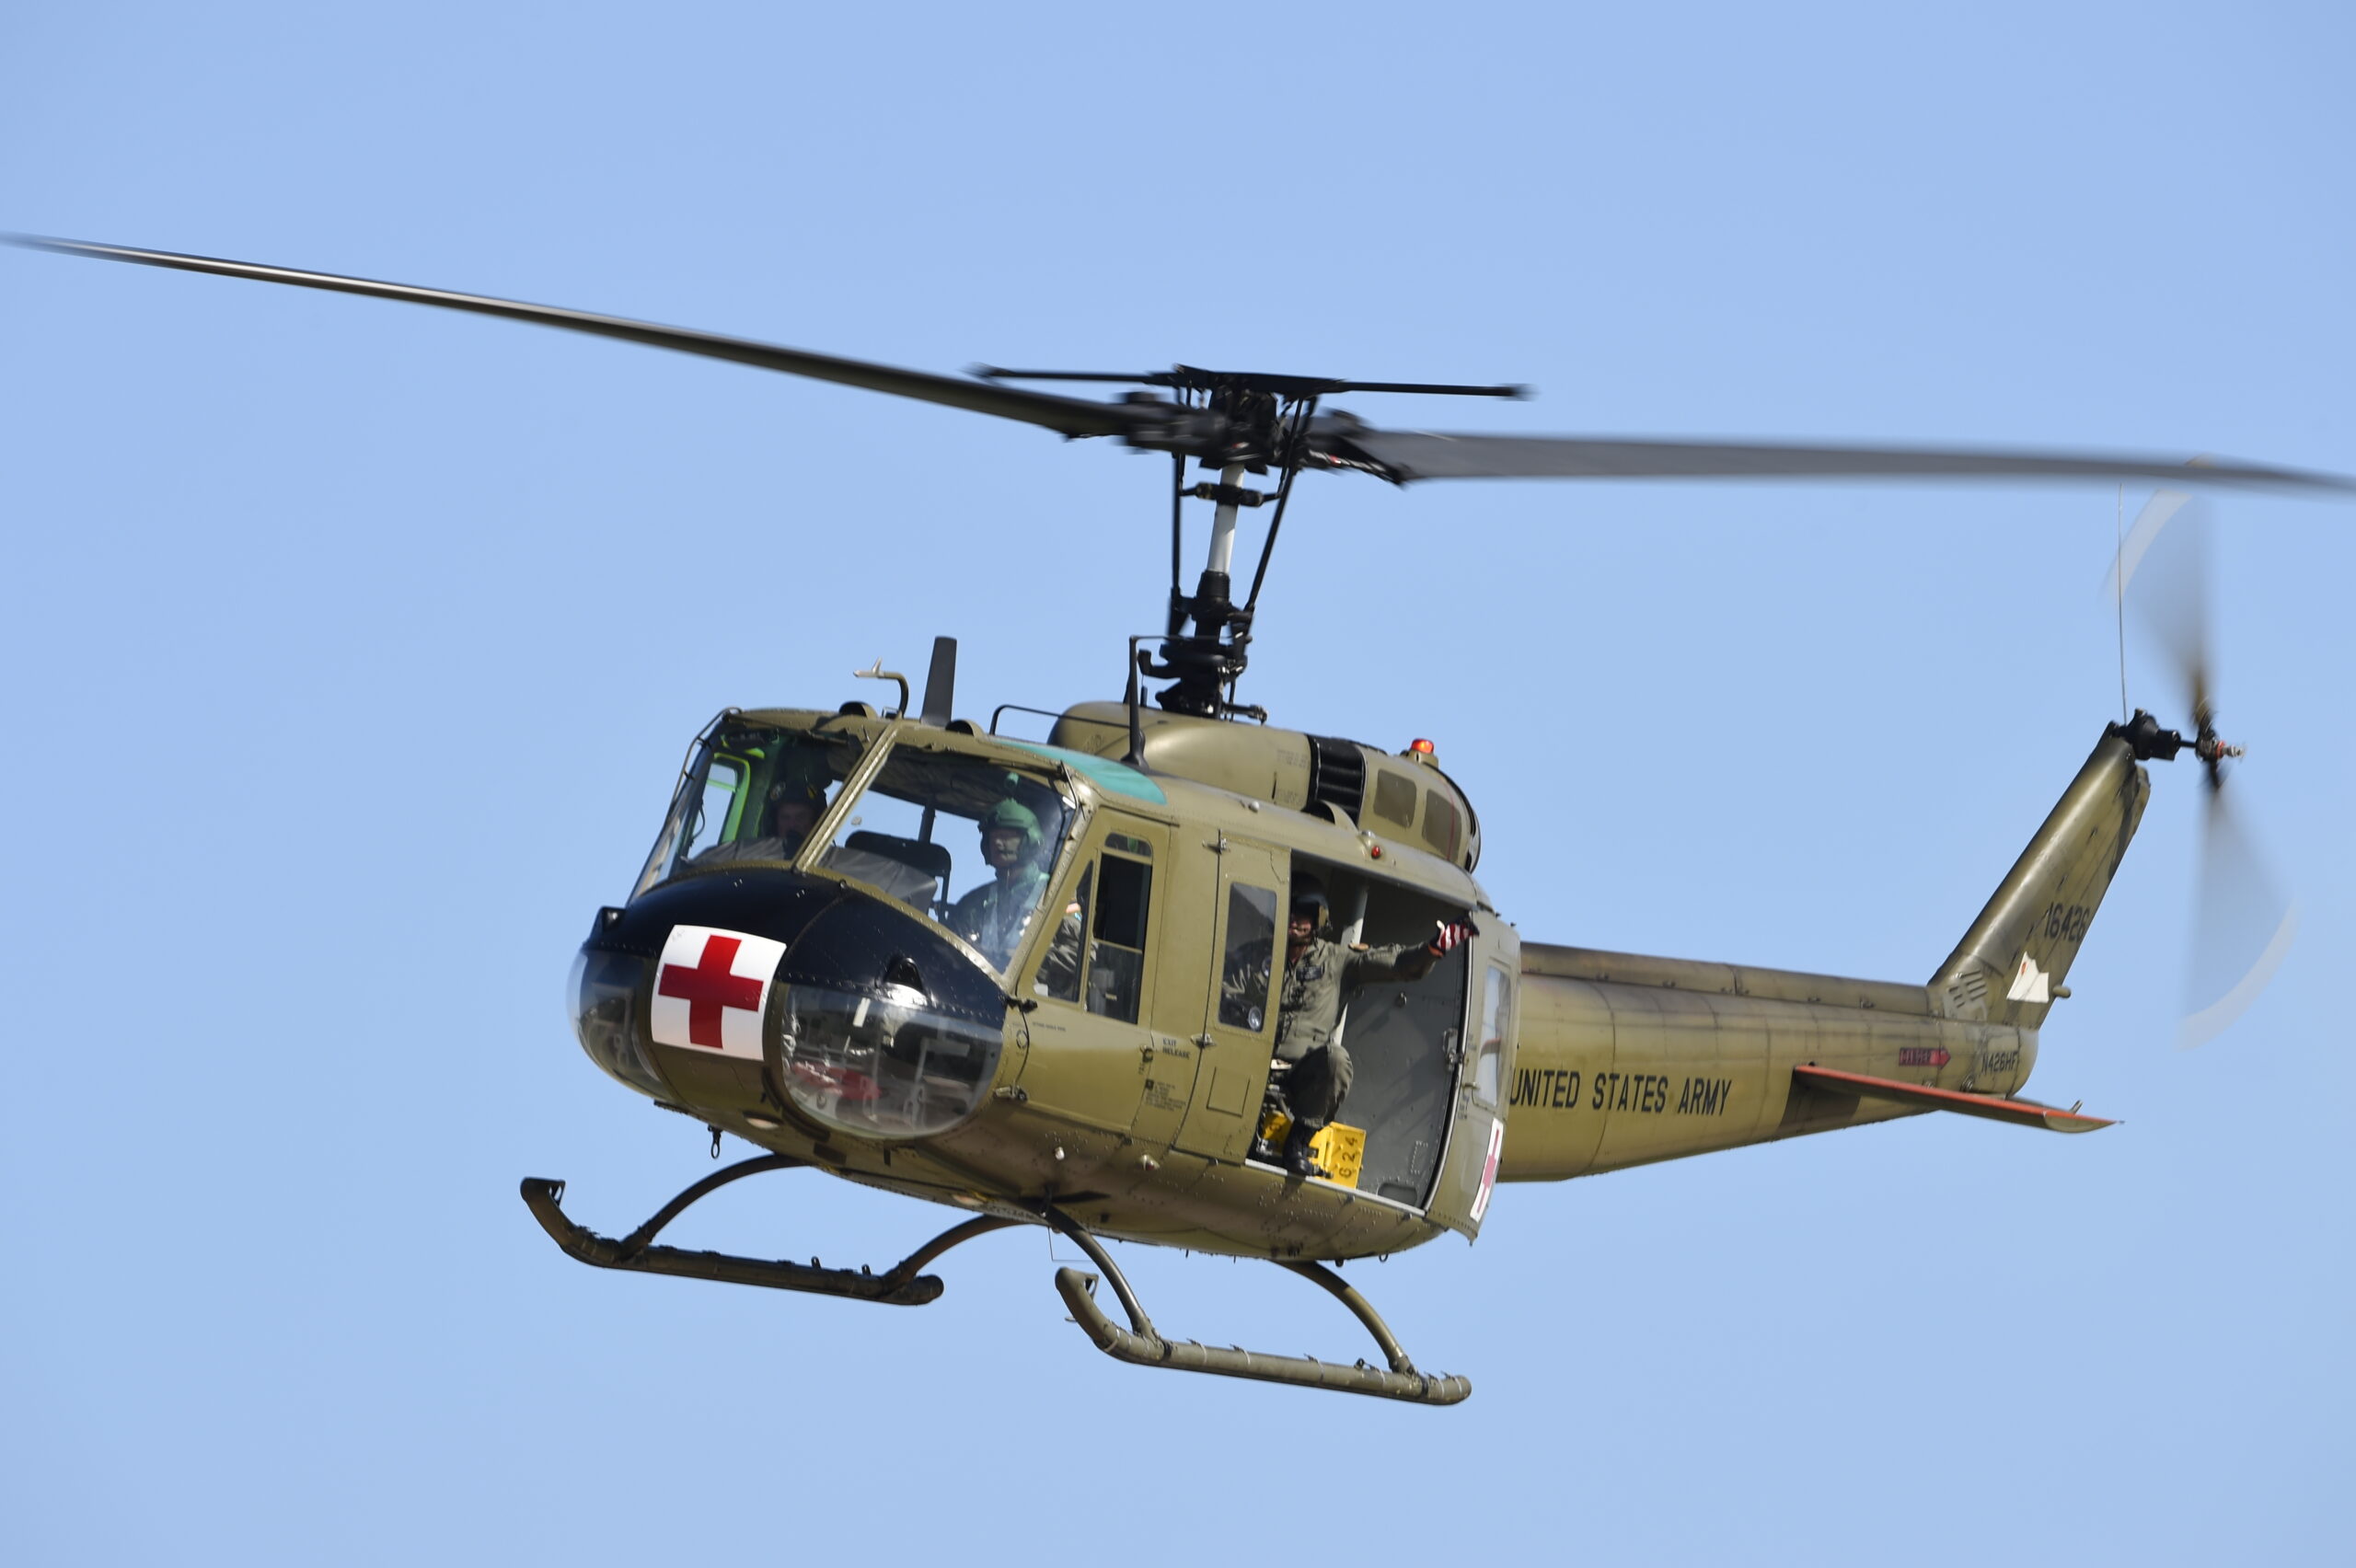 Huey helicopter at Oshkosh 2015 by Spencer Thornton scaled